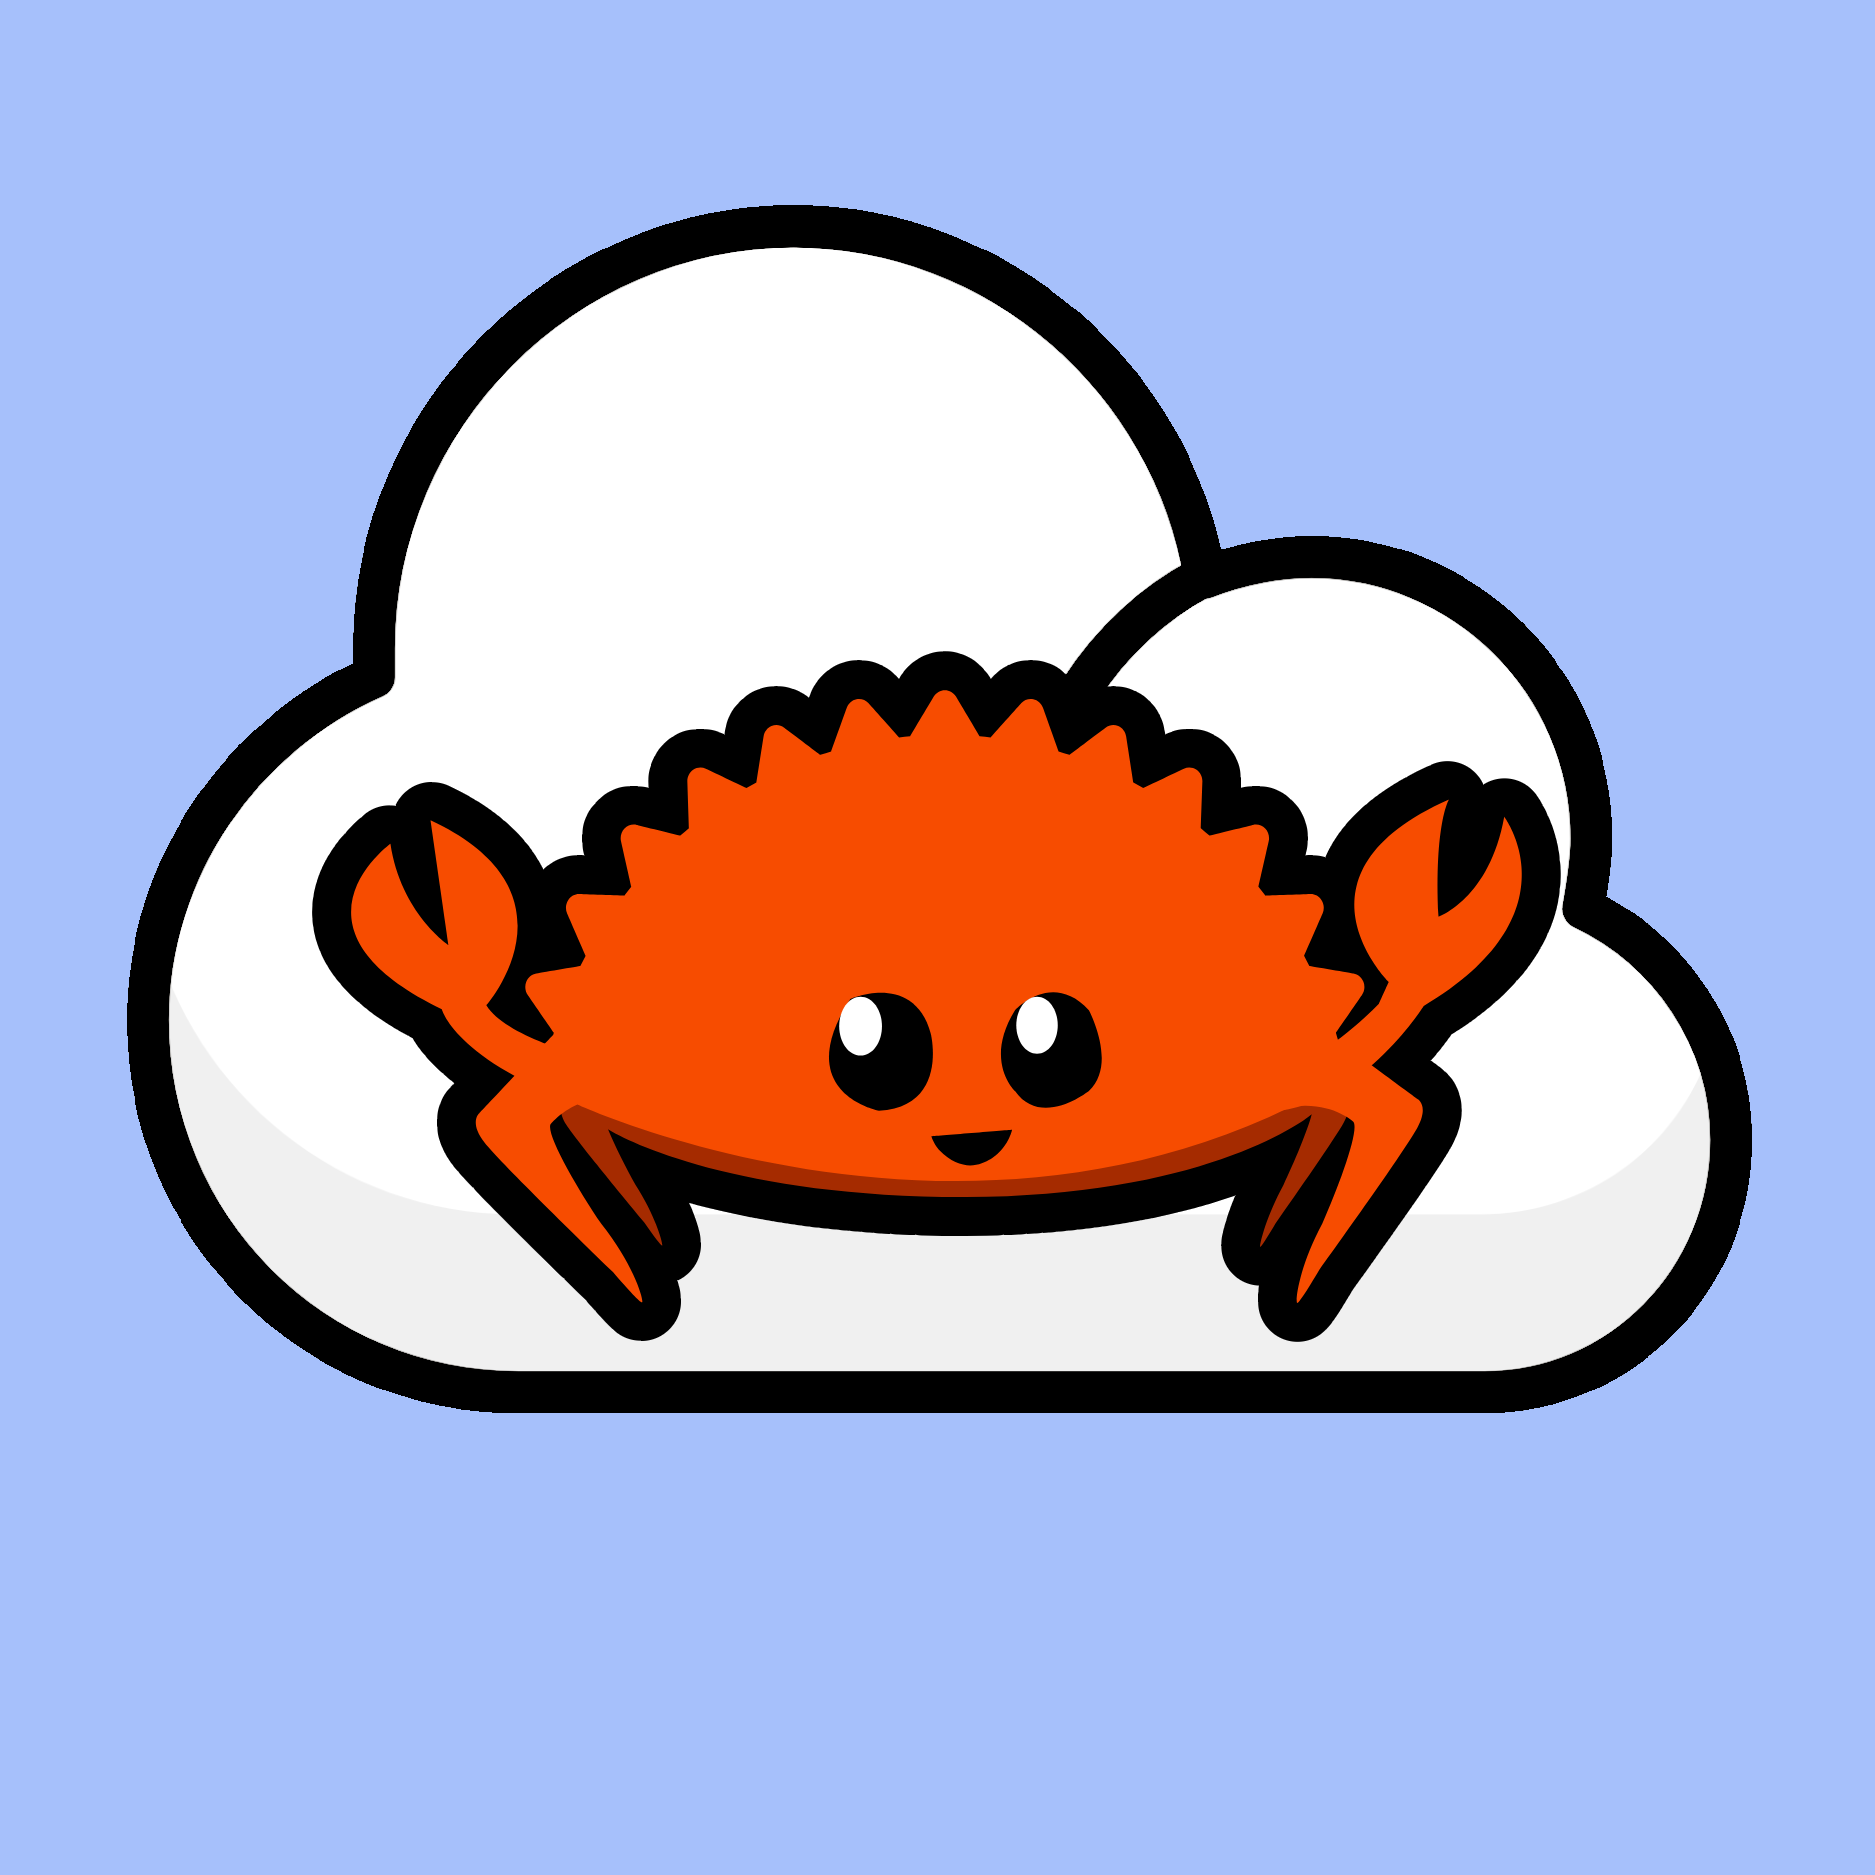 rust-cloud-native-logo